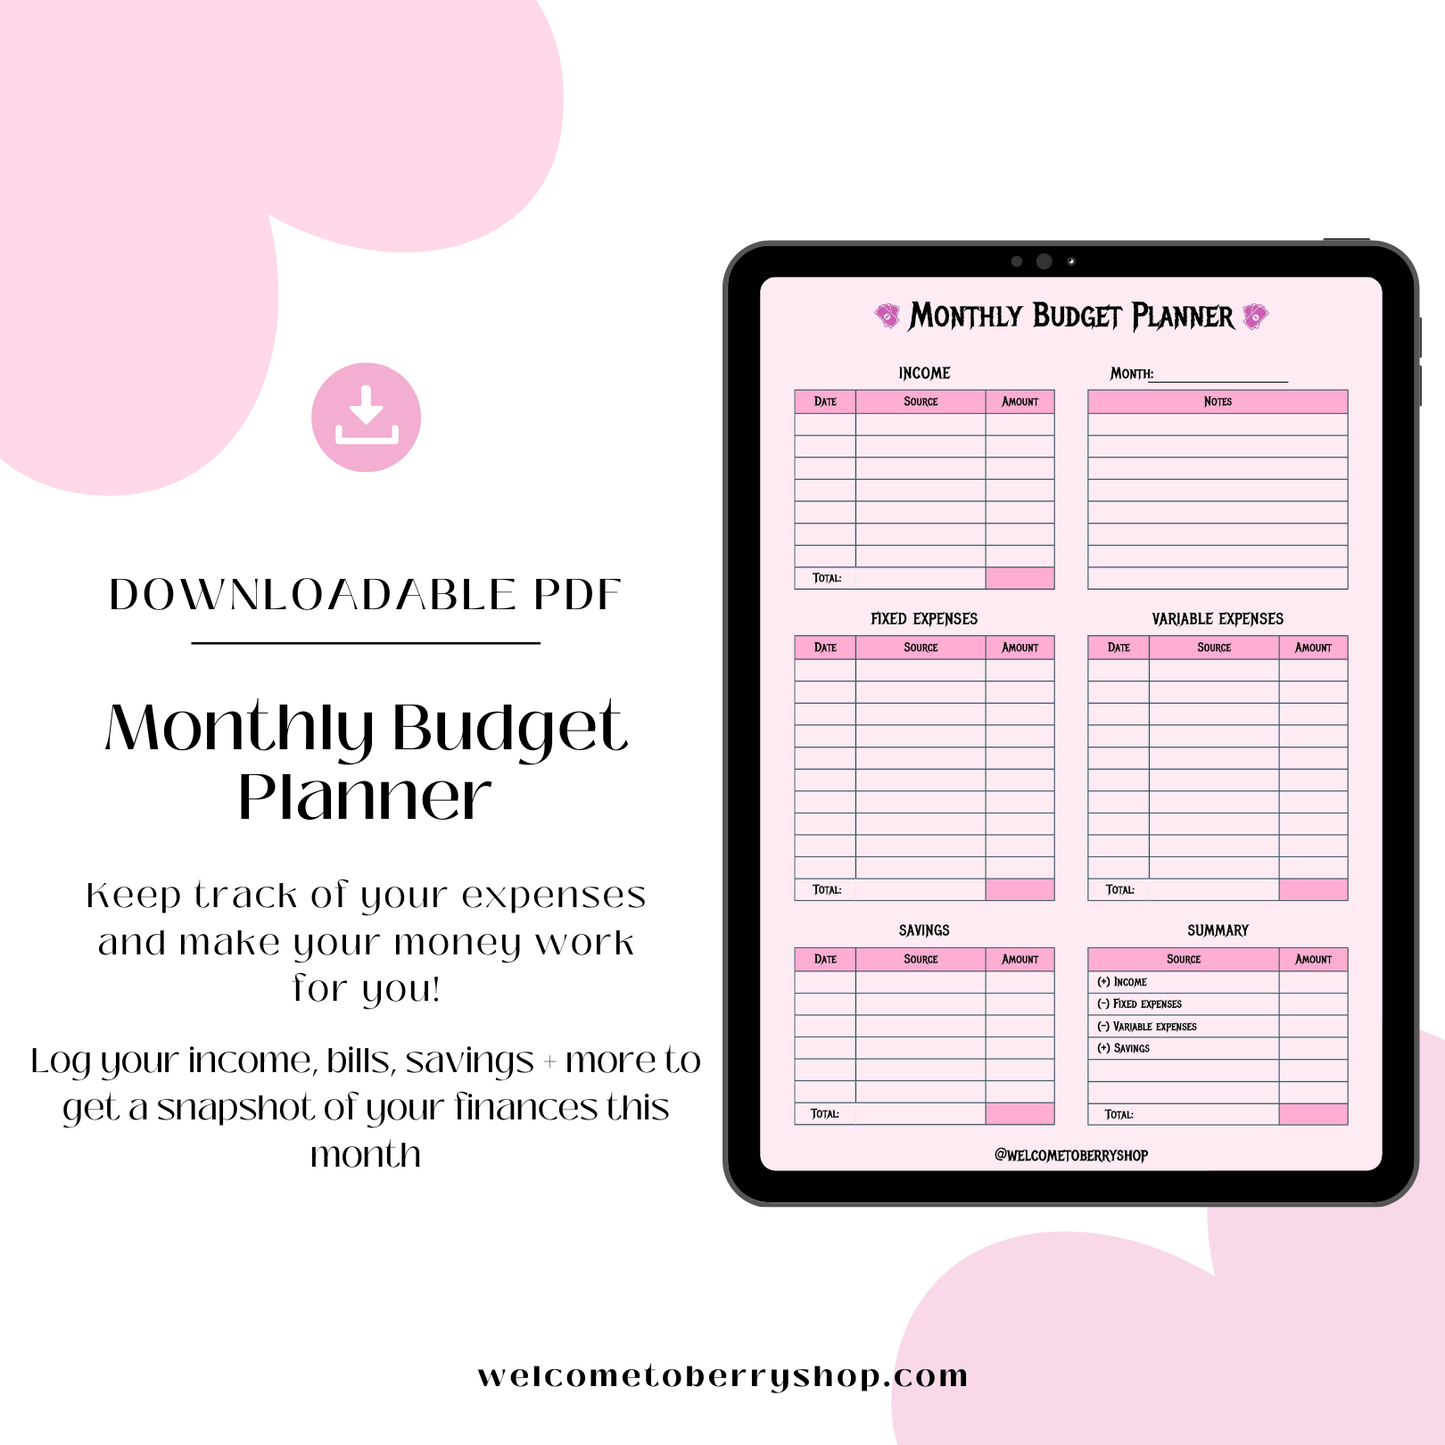 Berry's Monthly Budget Planner PDF Sheet + 10 Bonus Money Tips!